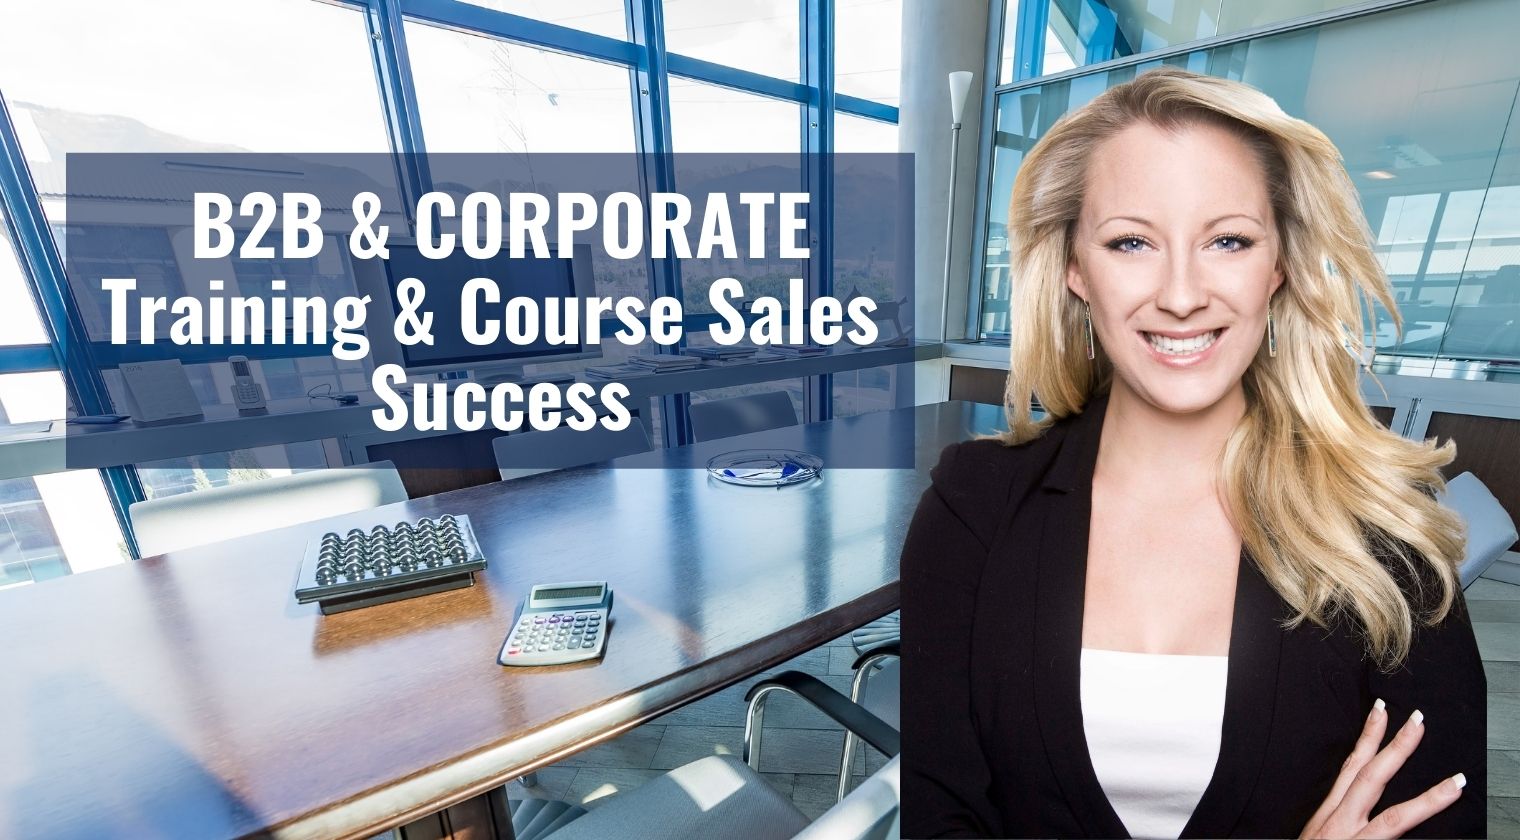 Copy of B2B & CORPORATE Training & Course Sales Success